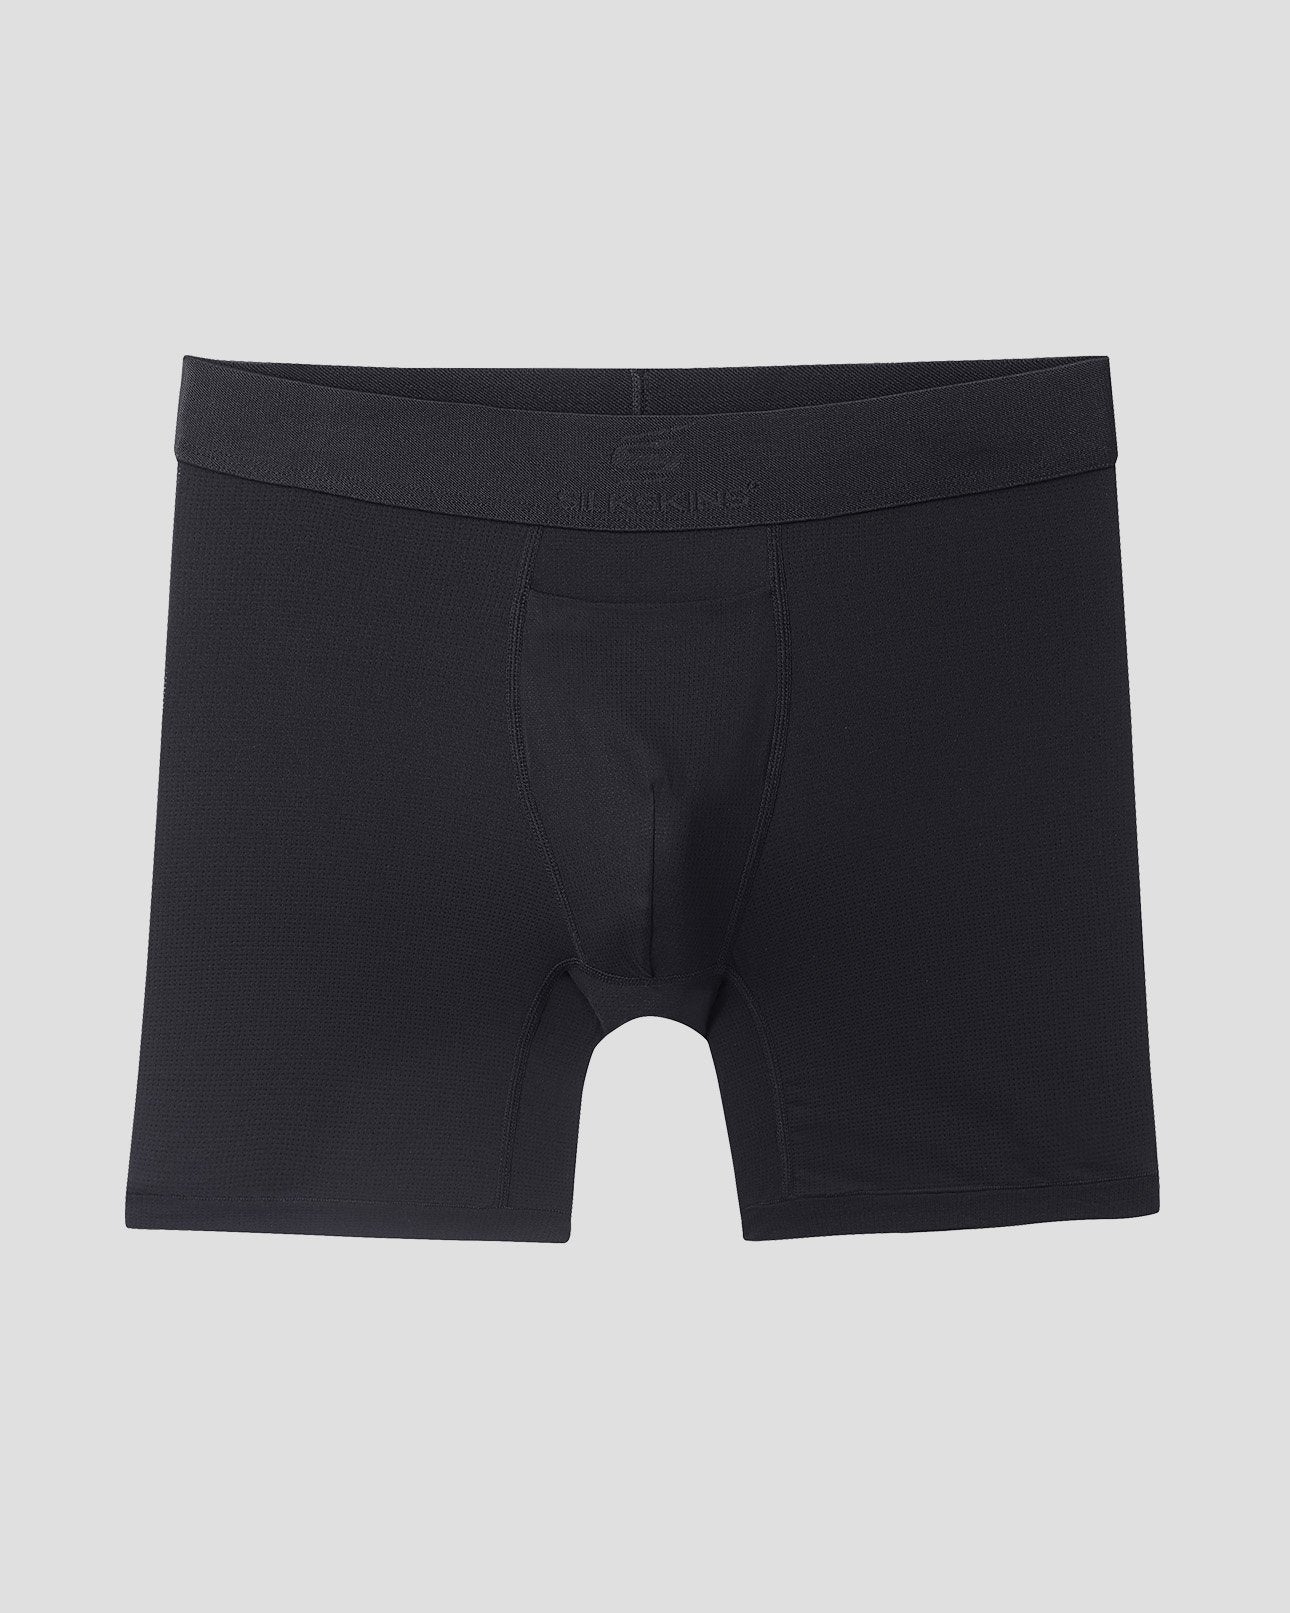 Taimen Polartec Power Dry Boxer - Black, Fishing Underwear - Taimen